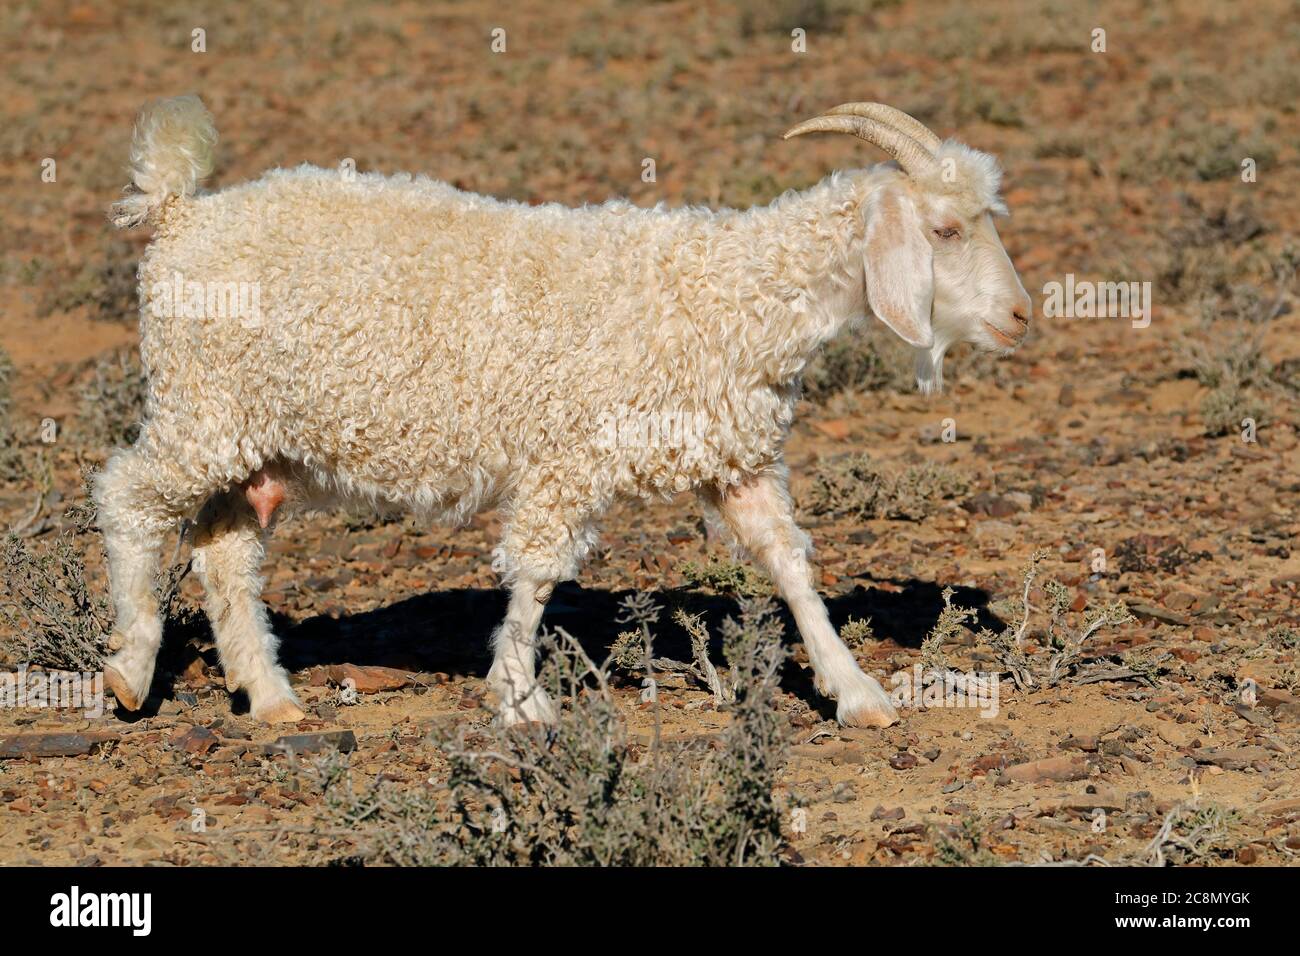 An Angora goat on a rural African free-range farm Stock Photo